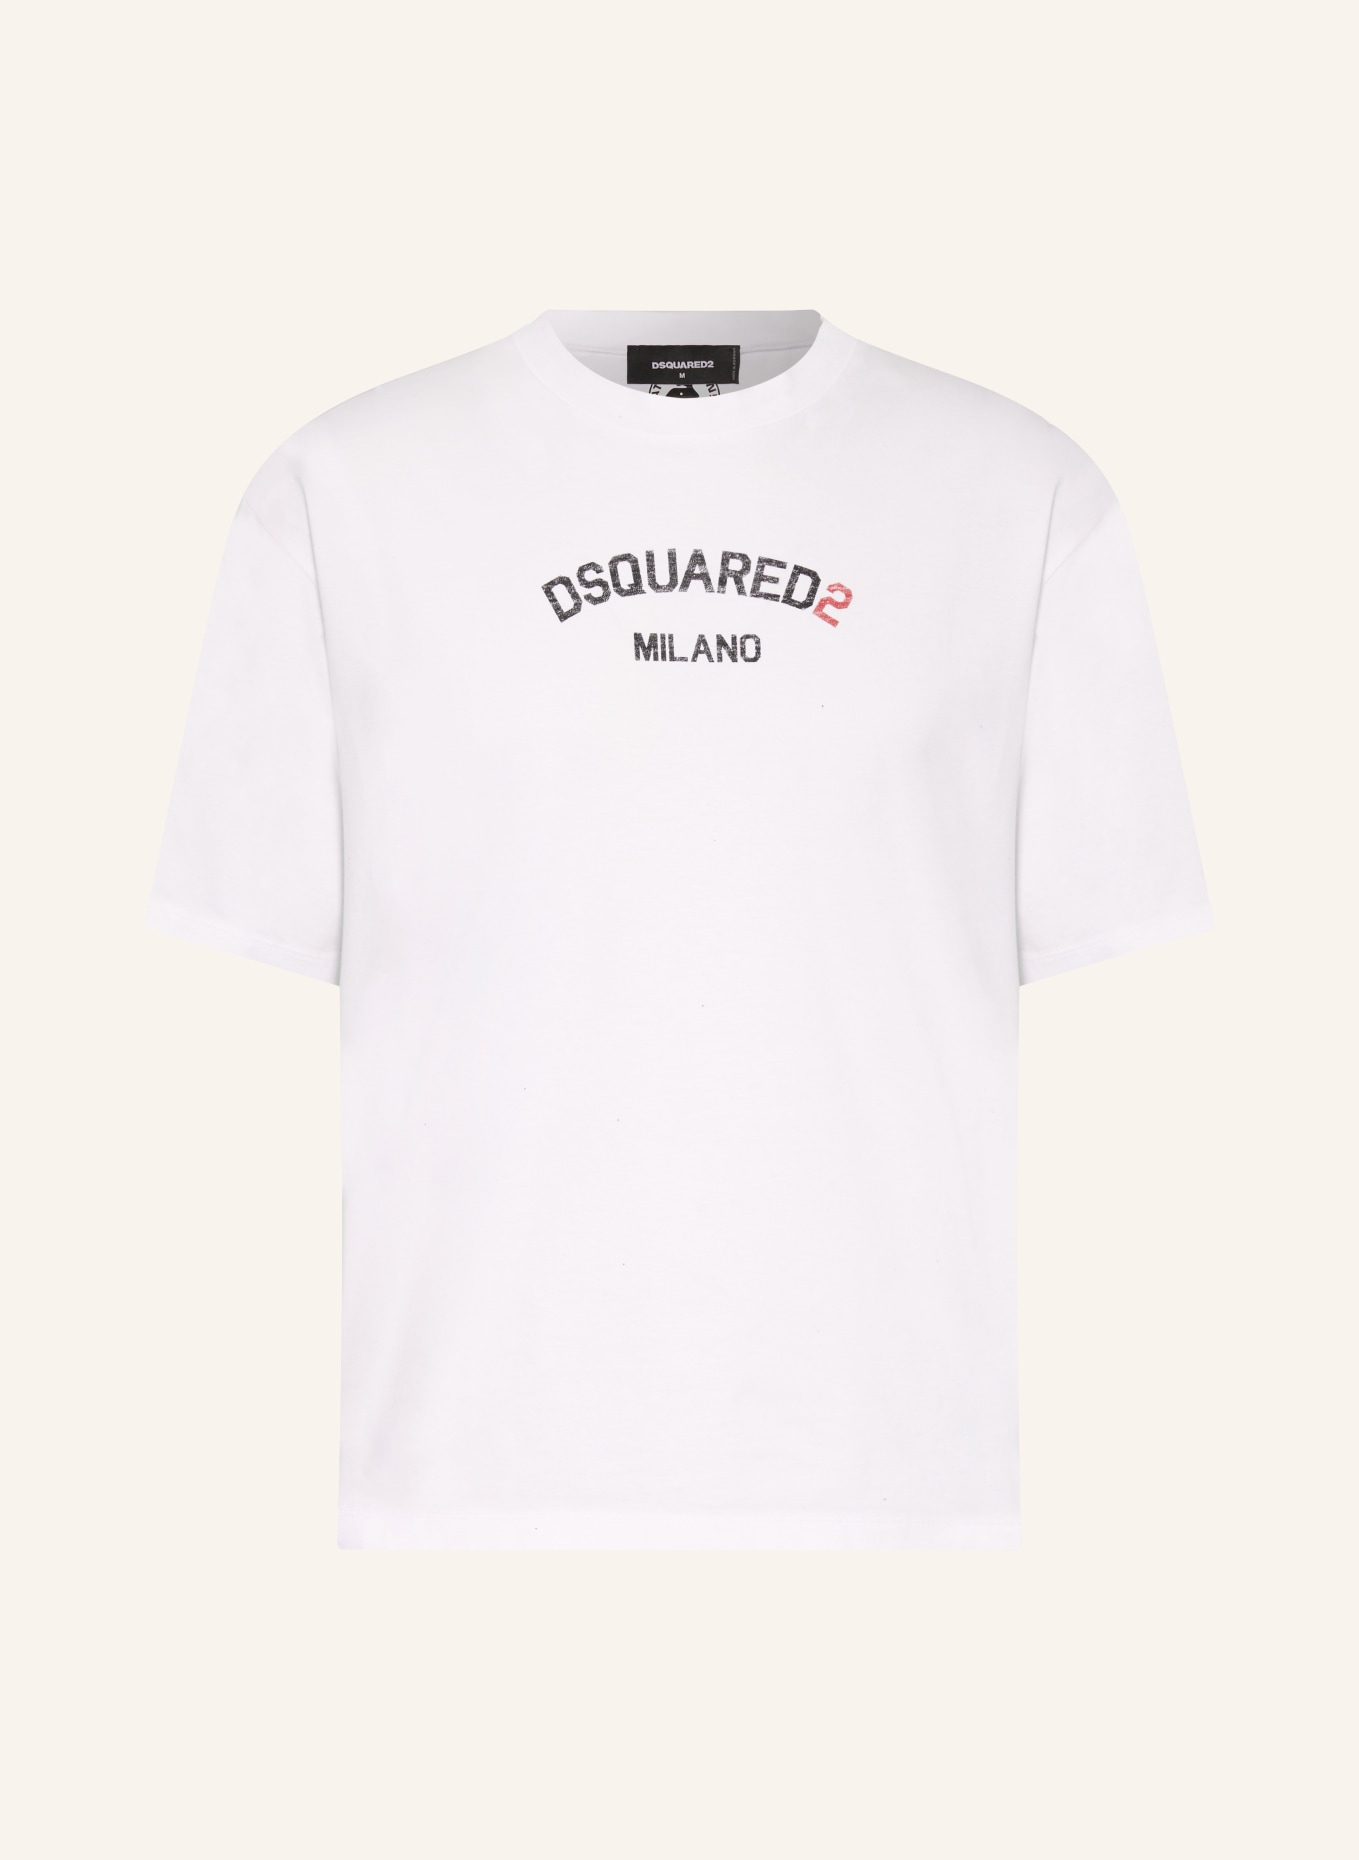 DSQUARED2 T-Shirt MILANO, Farbe: WEISS/ SCHWARZ (Bild 1)